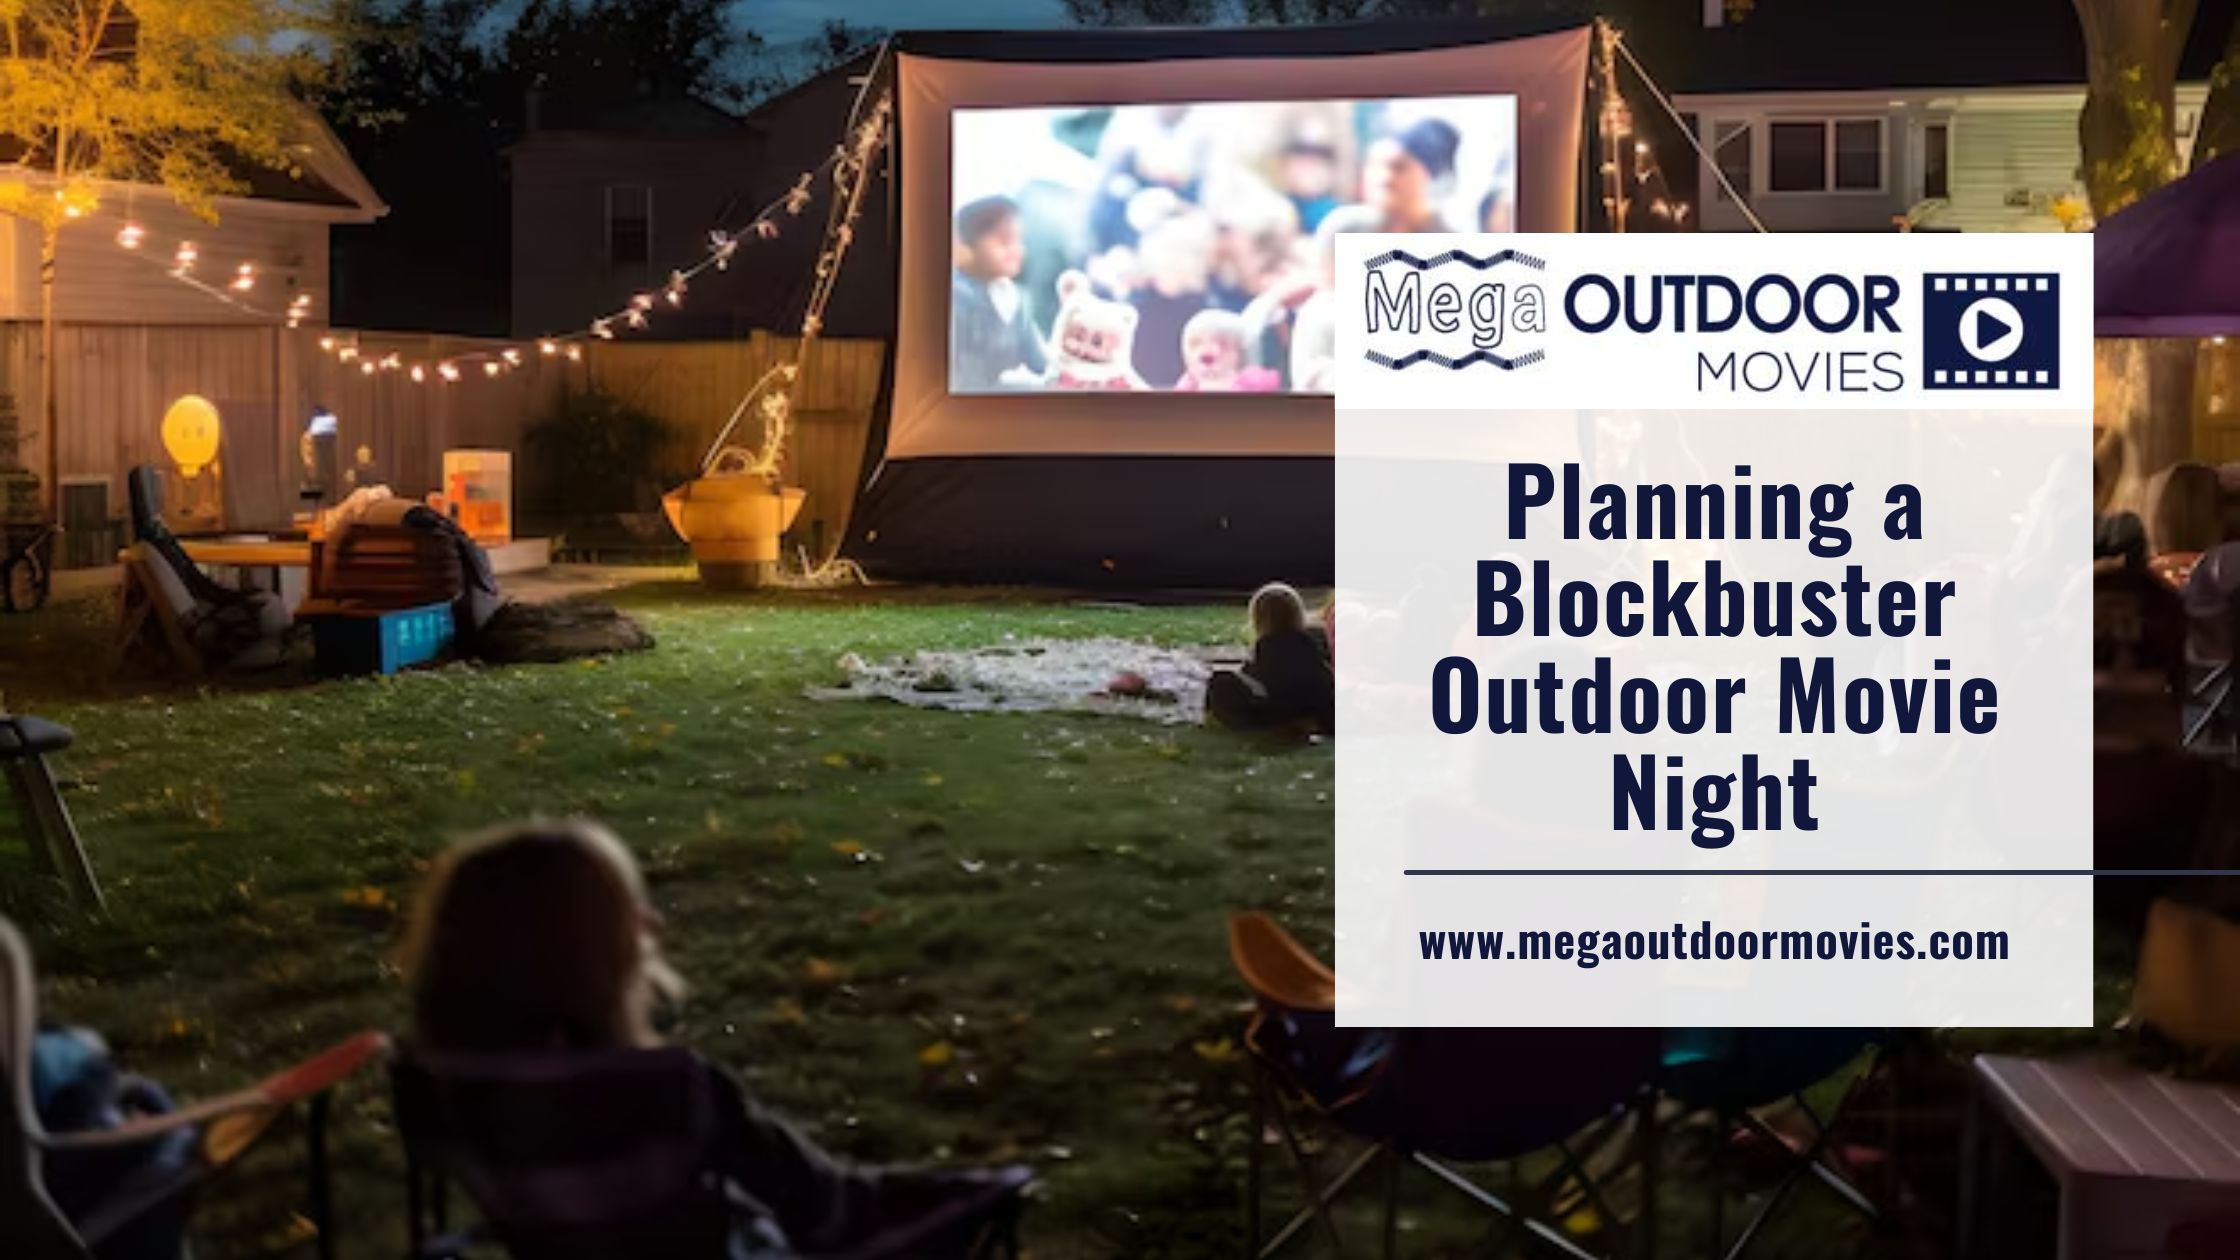 Outdoor movie events